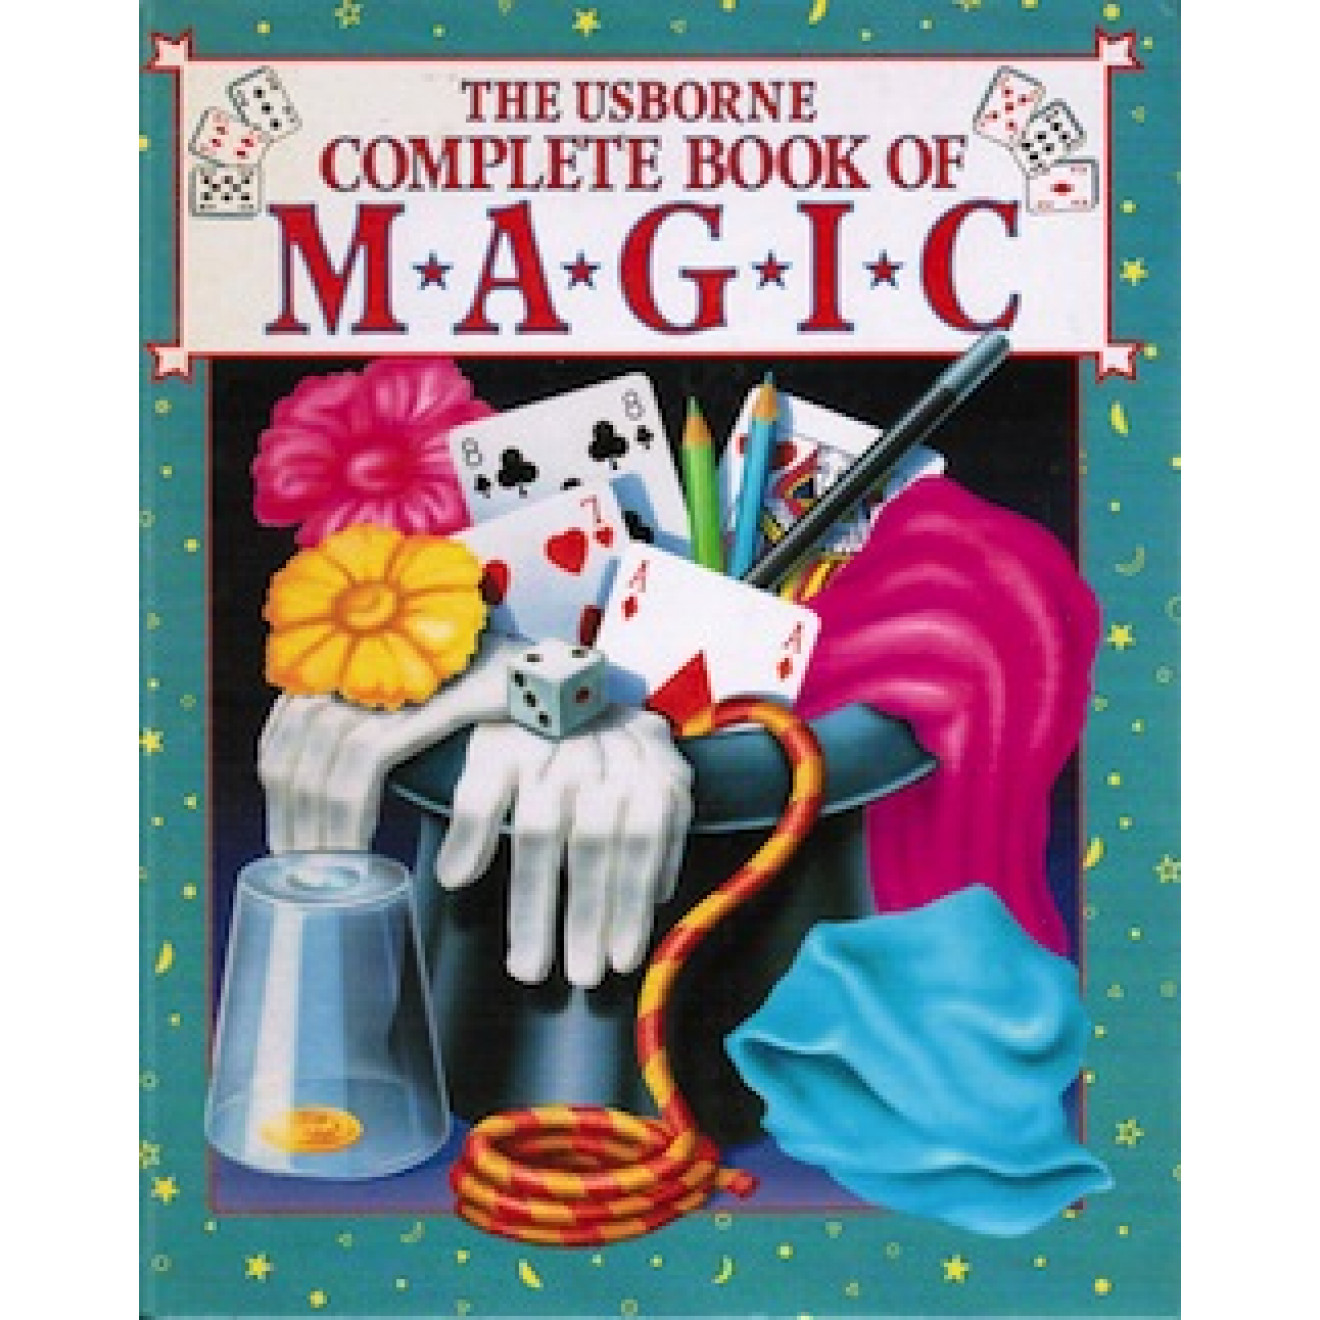 The usborne comlete book of magic